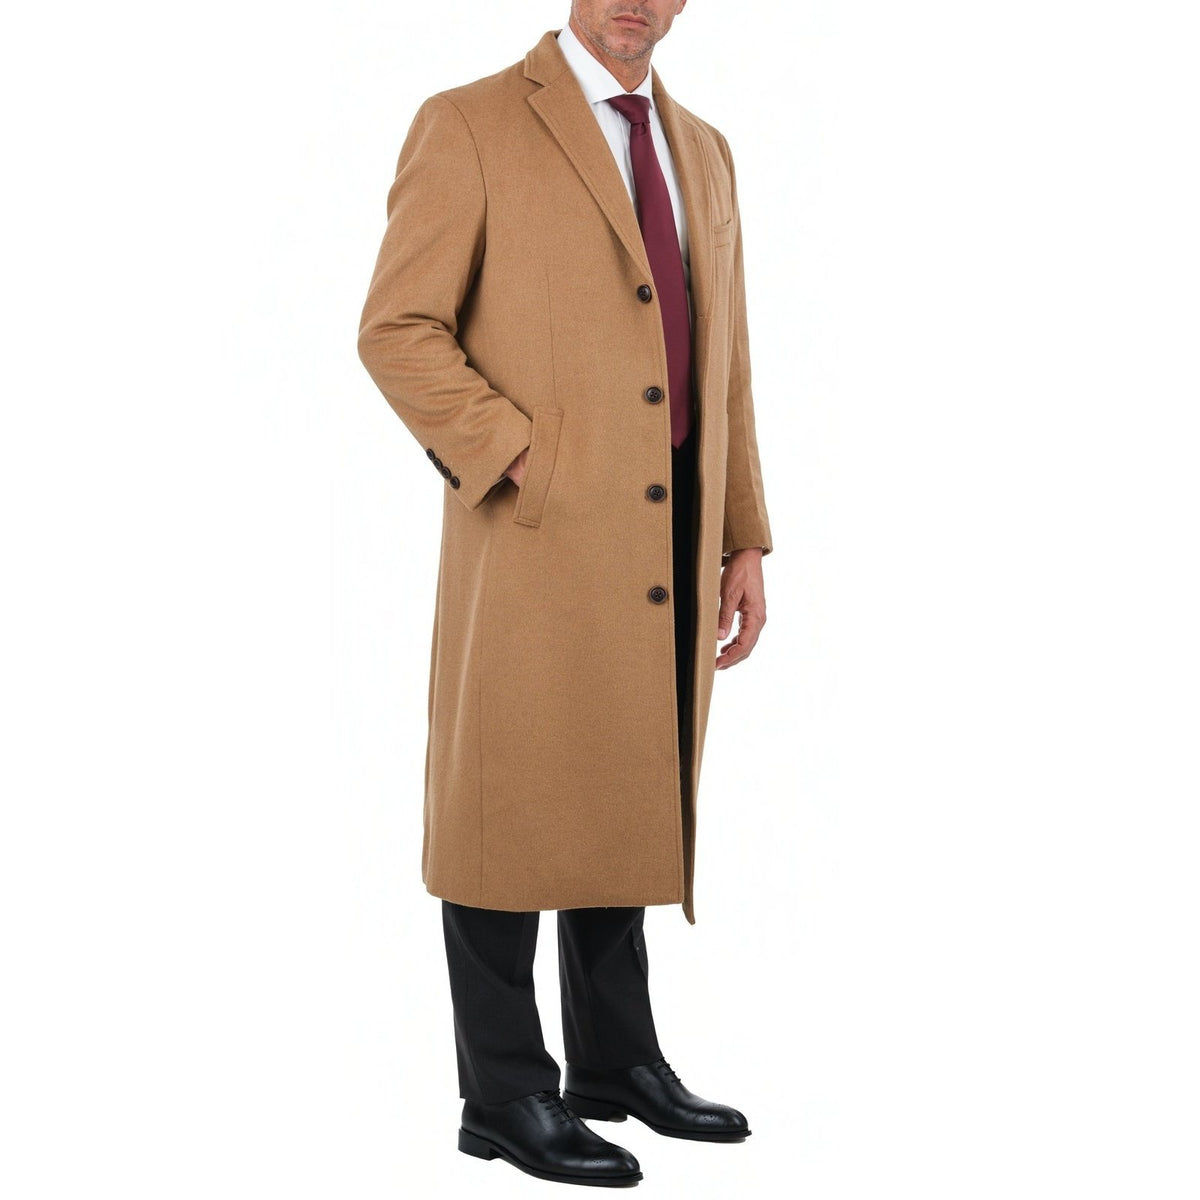 Arthur Black Mens Regular Fit Solid Camel Tan Full Length Wool Cashmere Overcoat Top Coat | 72R